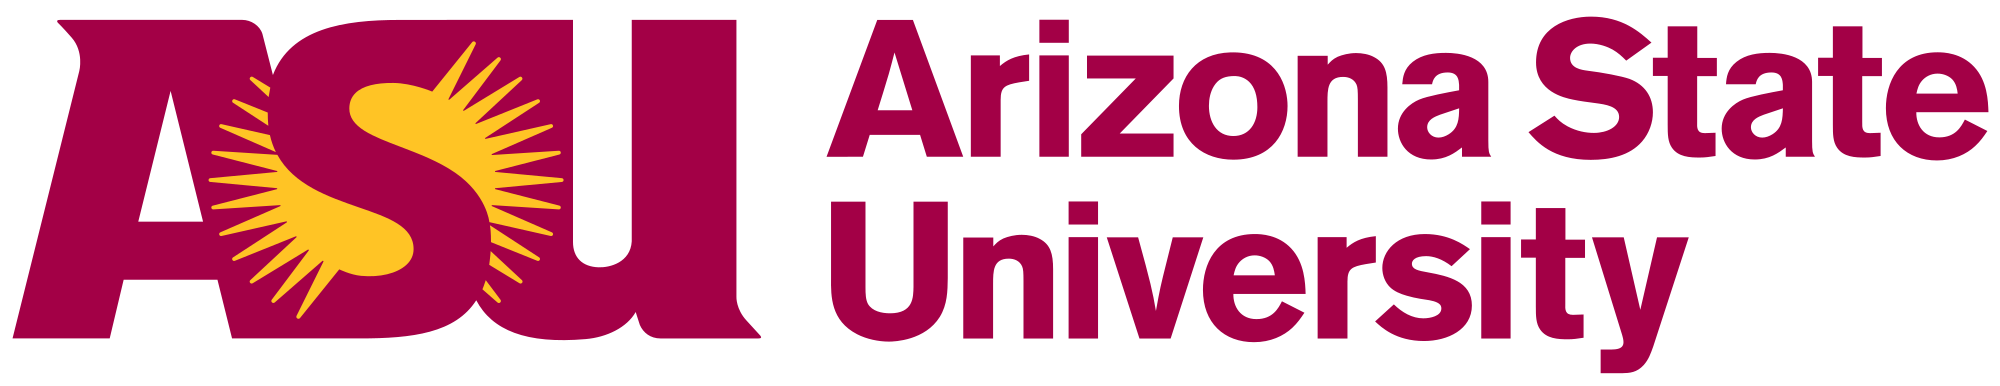 Arizona State University Logo - File:Arizona State University logo.svg - Wikimedia Commons